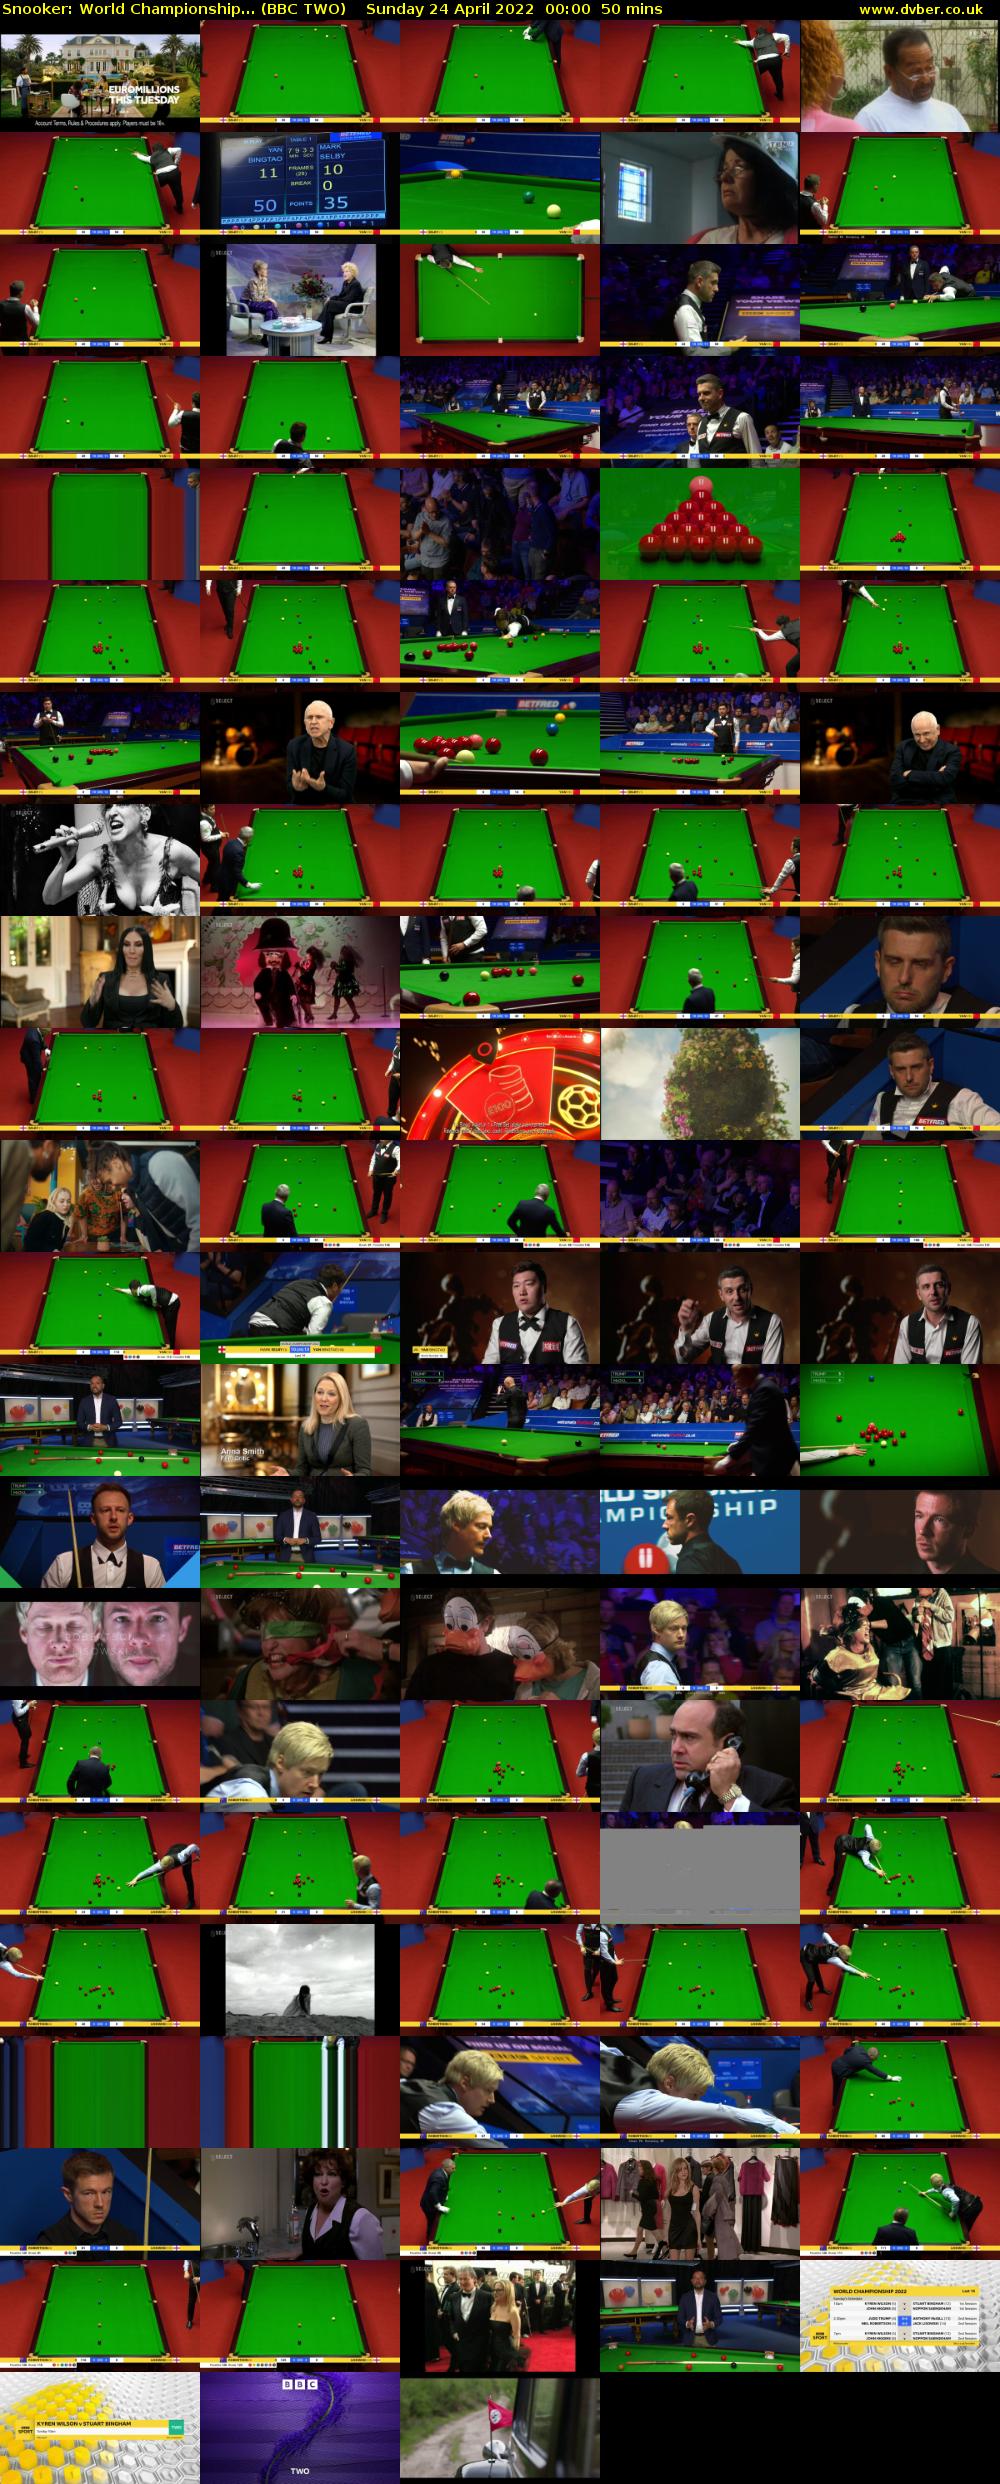 Snooker: World Championship... (BBC TWO) Sunday 24 April 2022 00:00 - 00:50